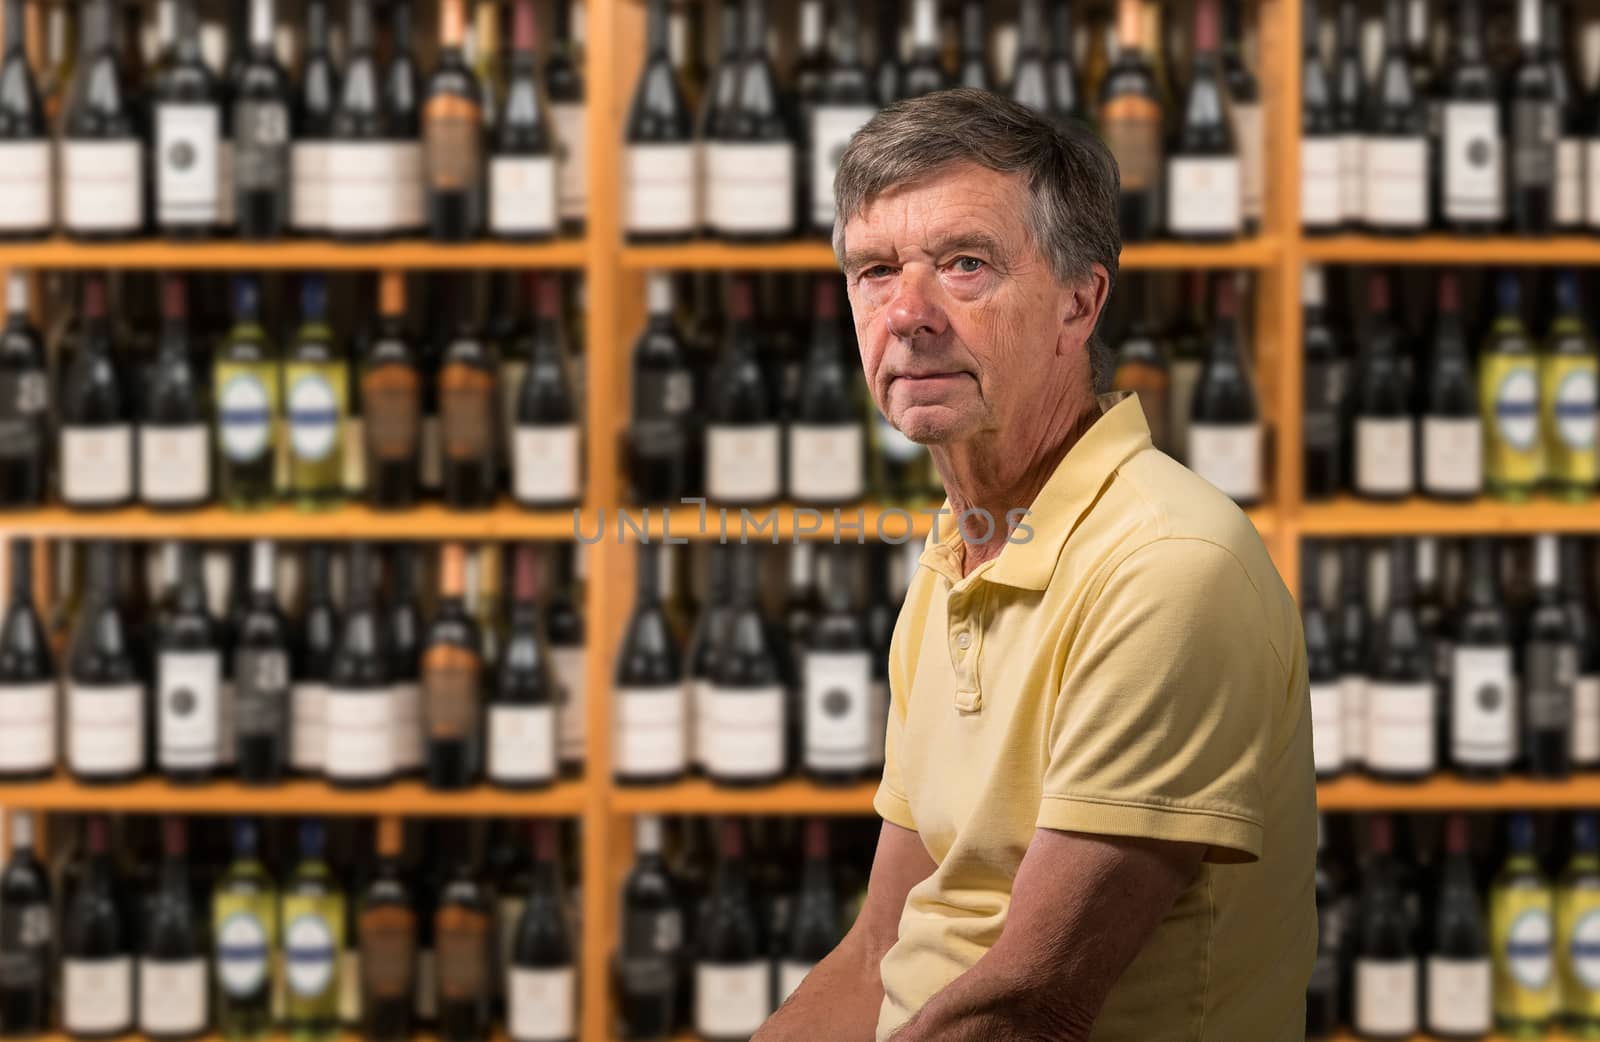 Senior caucasian man sitting in his wine cellar full of bottles by steheap